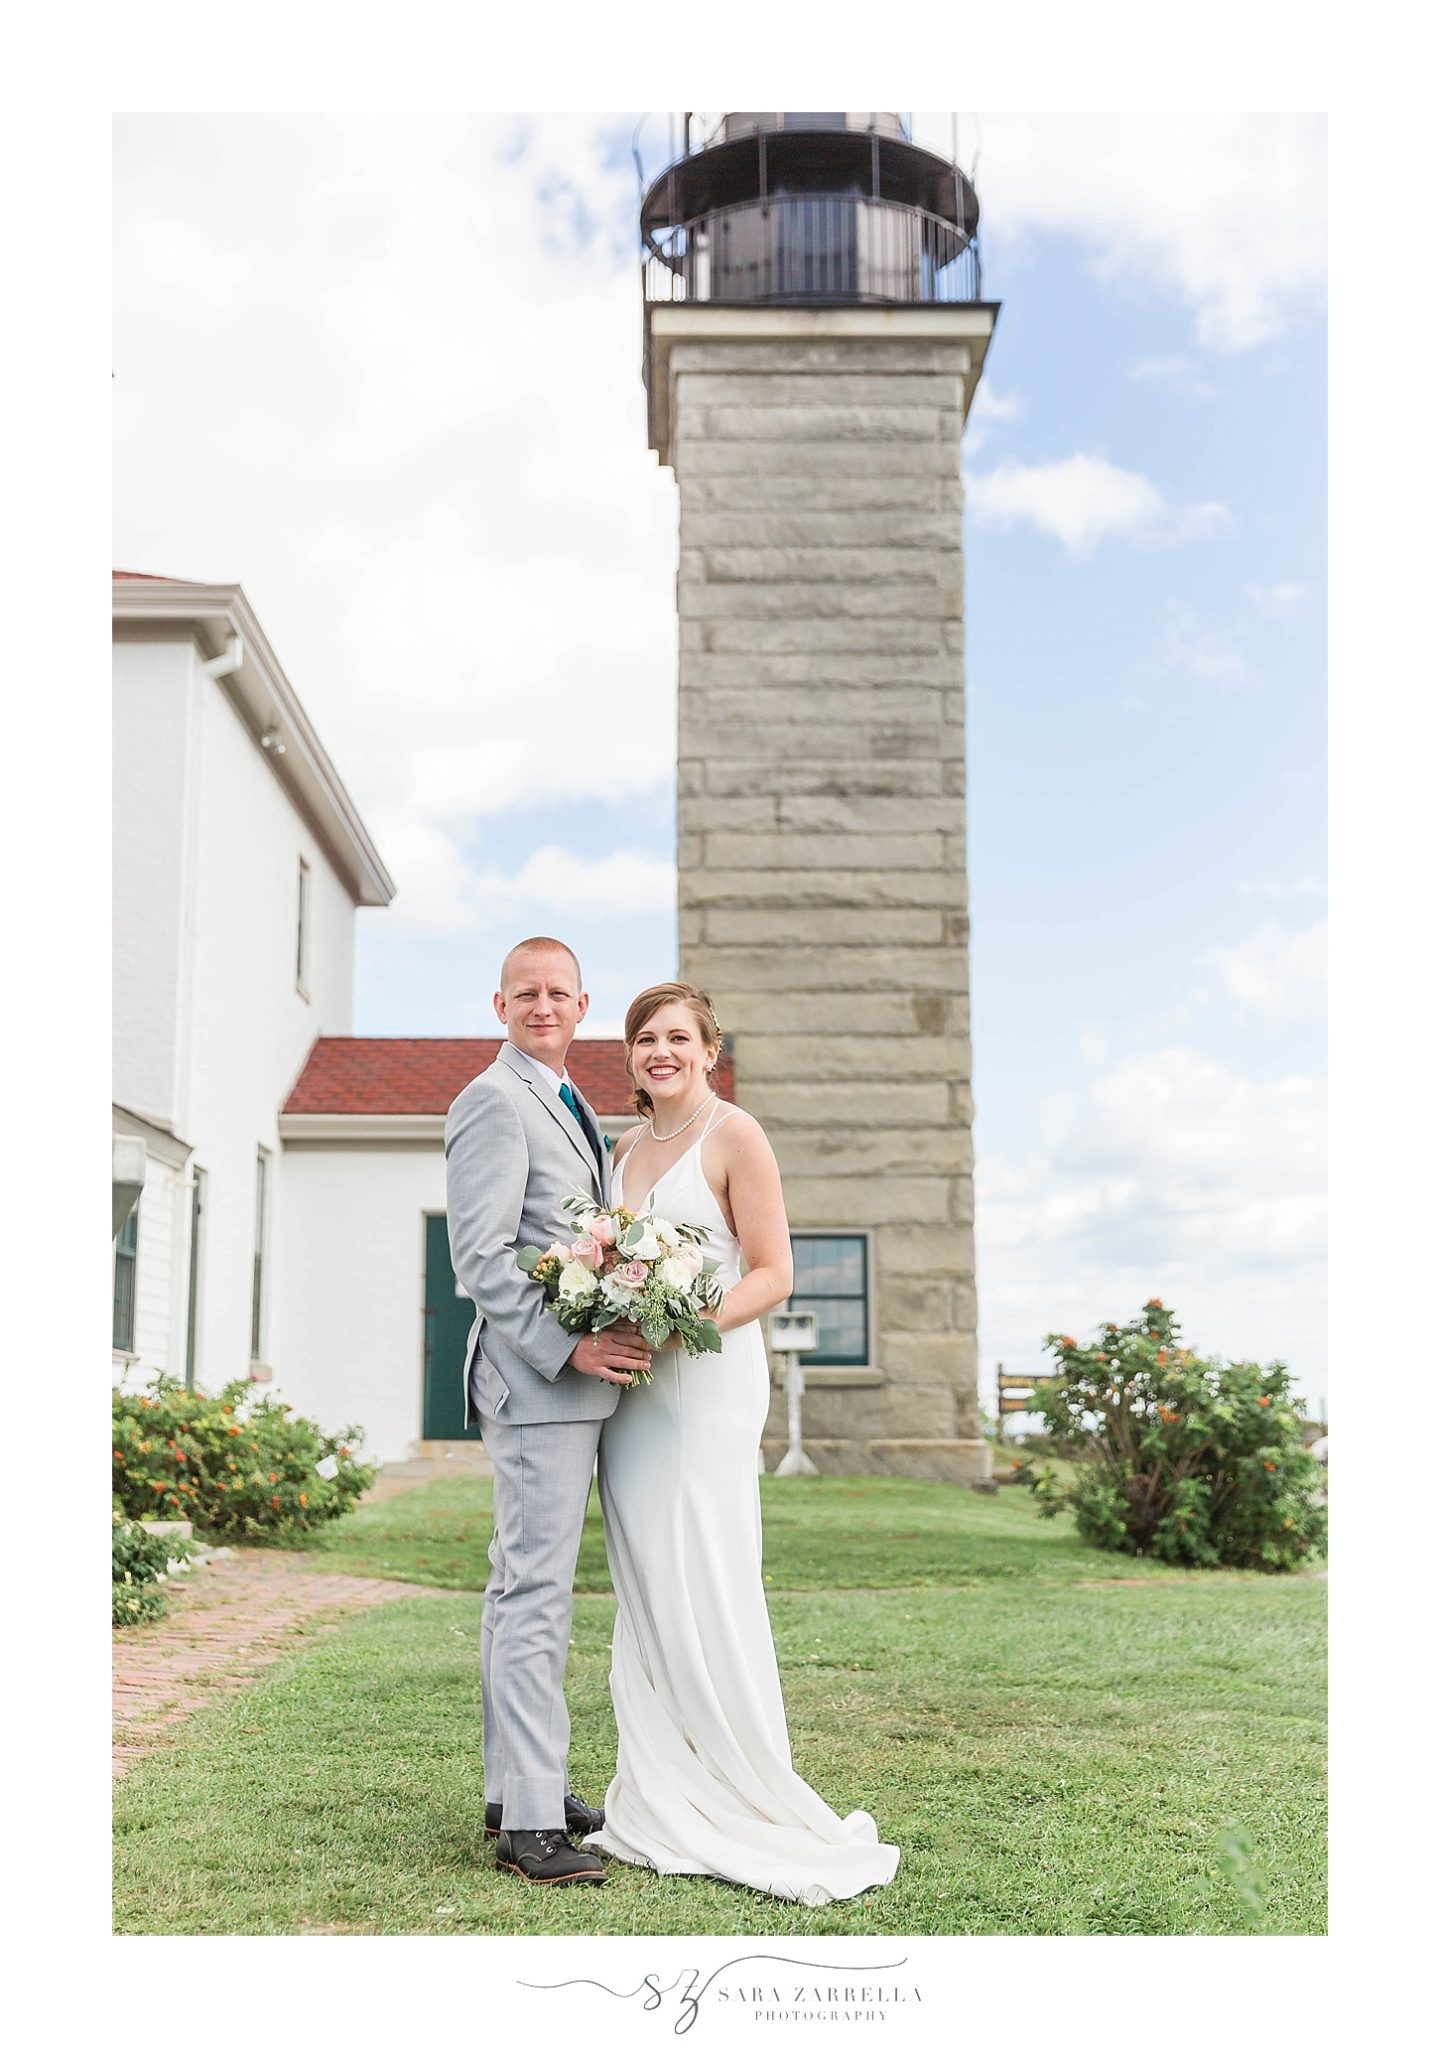 Katryn & Trey | Newport Marriott Wedding | Newport, RI